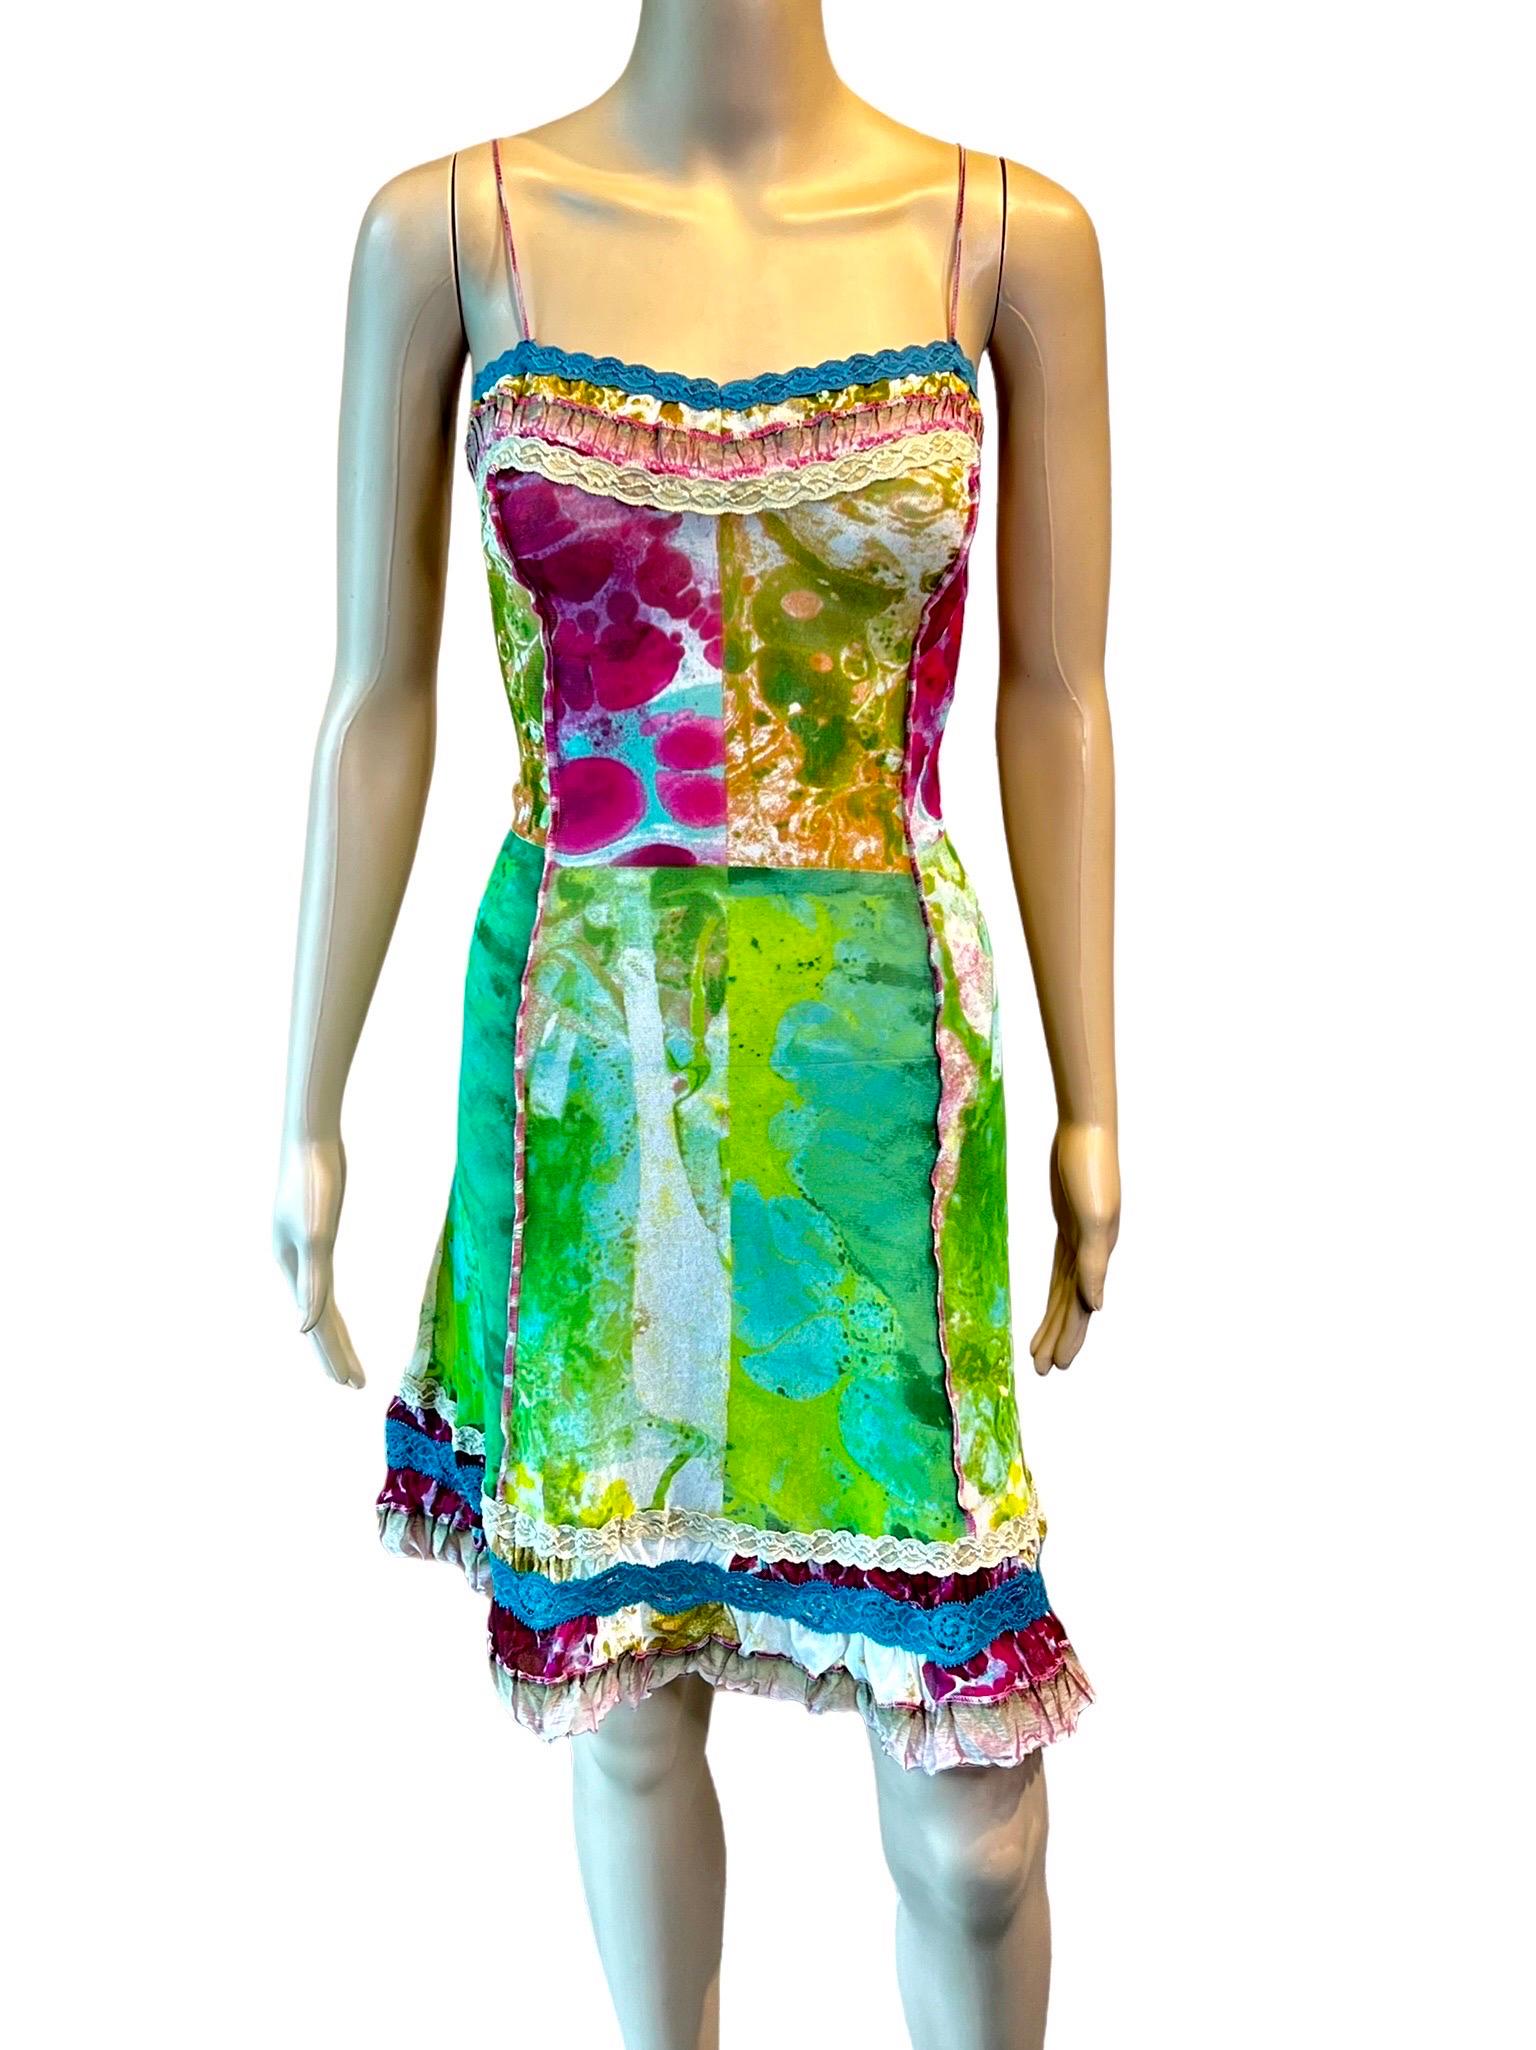 Green Jean Paul Gaultier S/S 2000 Psychedelic Bacteria Print Sheer Mesh Mini Dress  For Sale